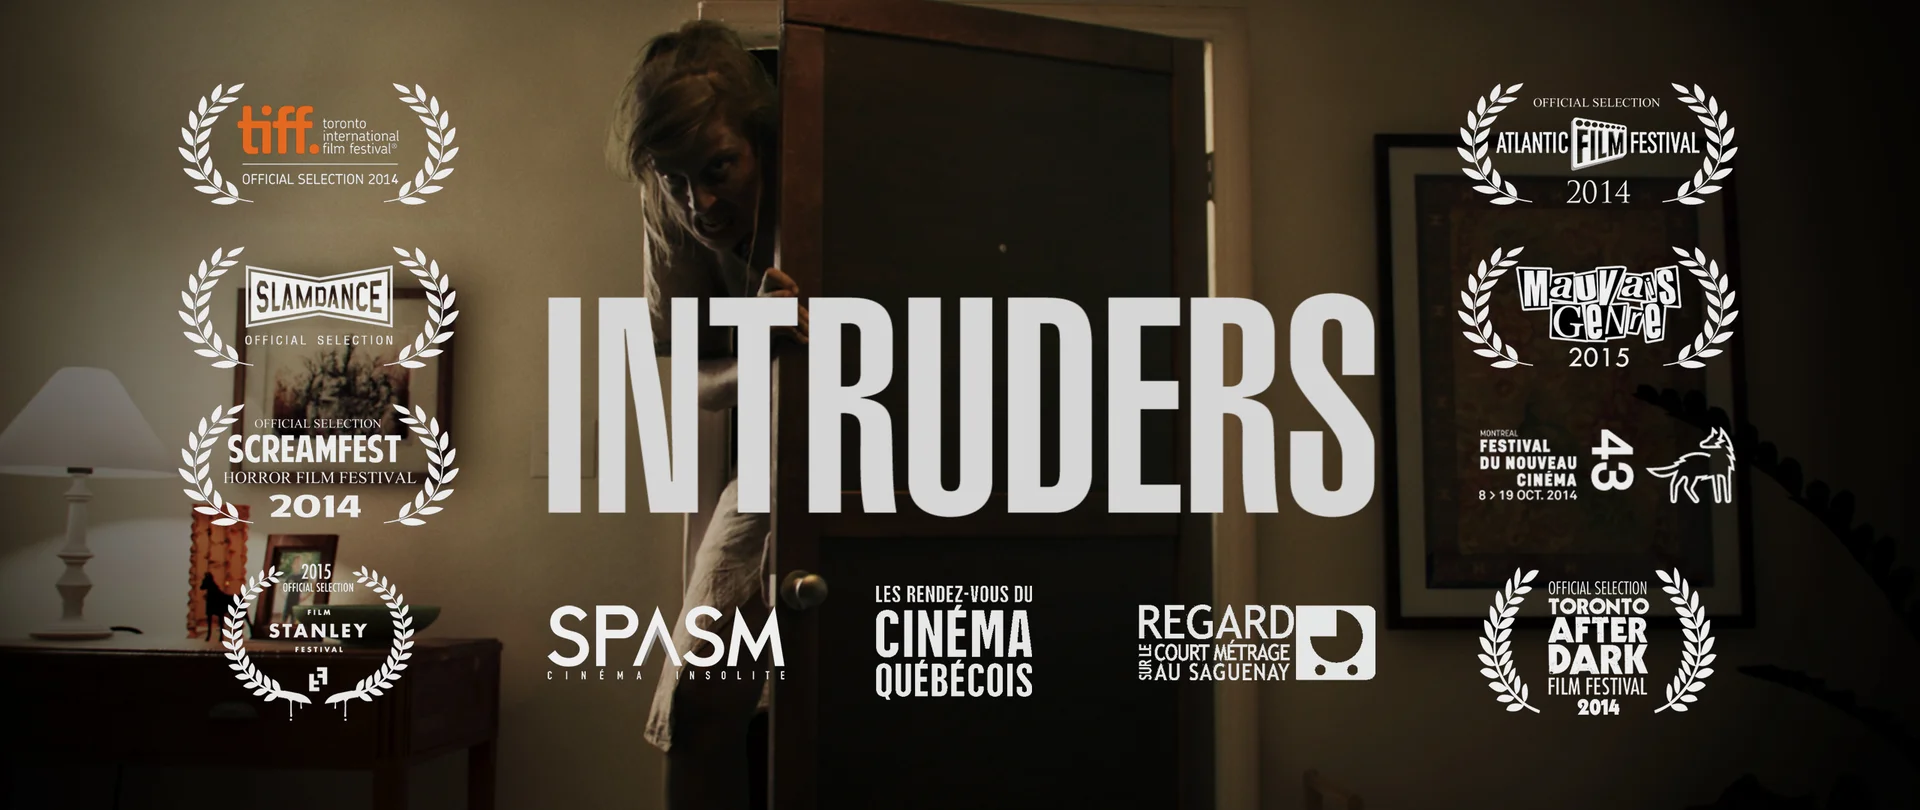 The Intruders, Full Movie